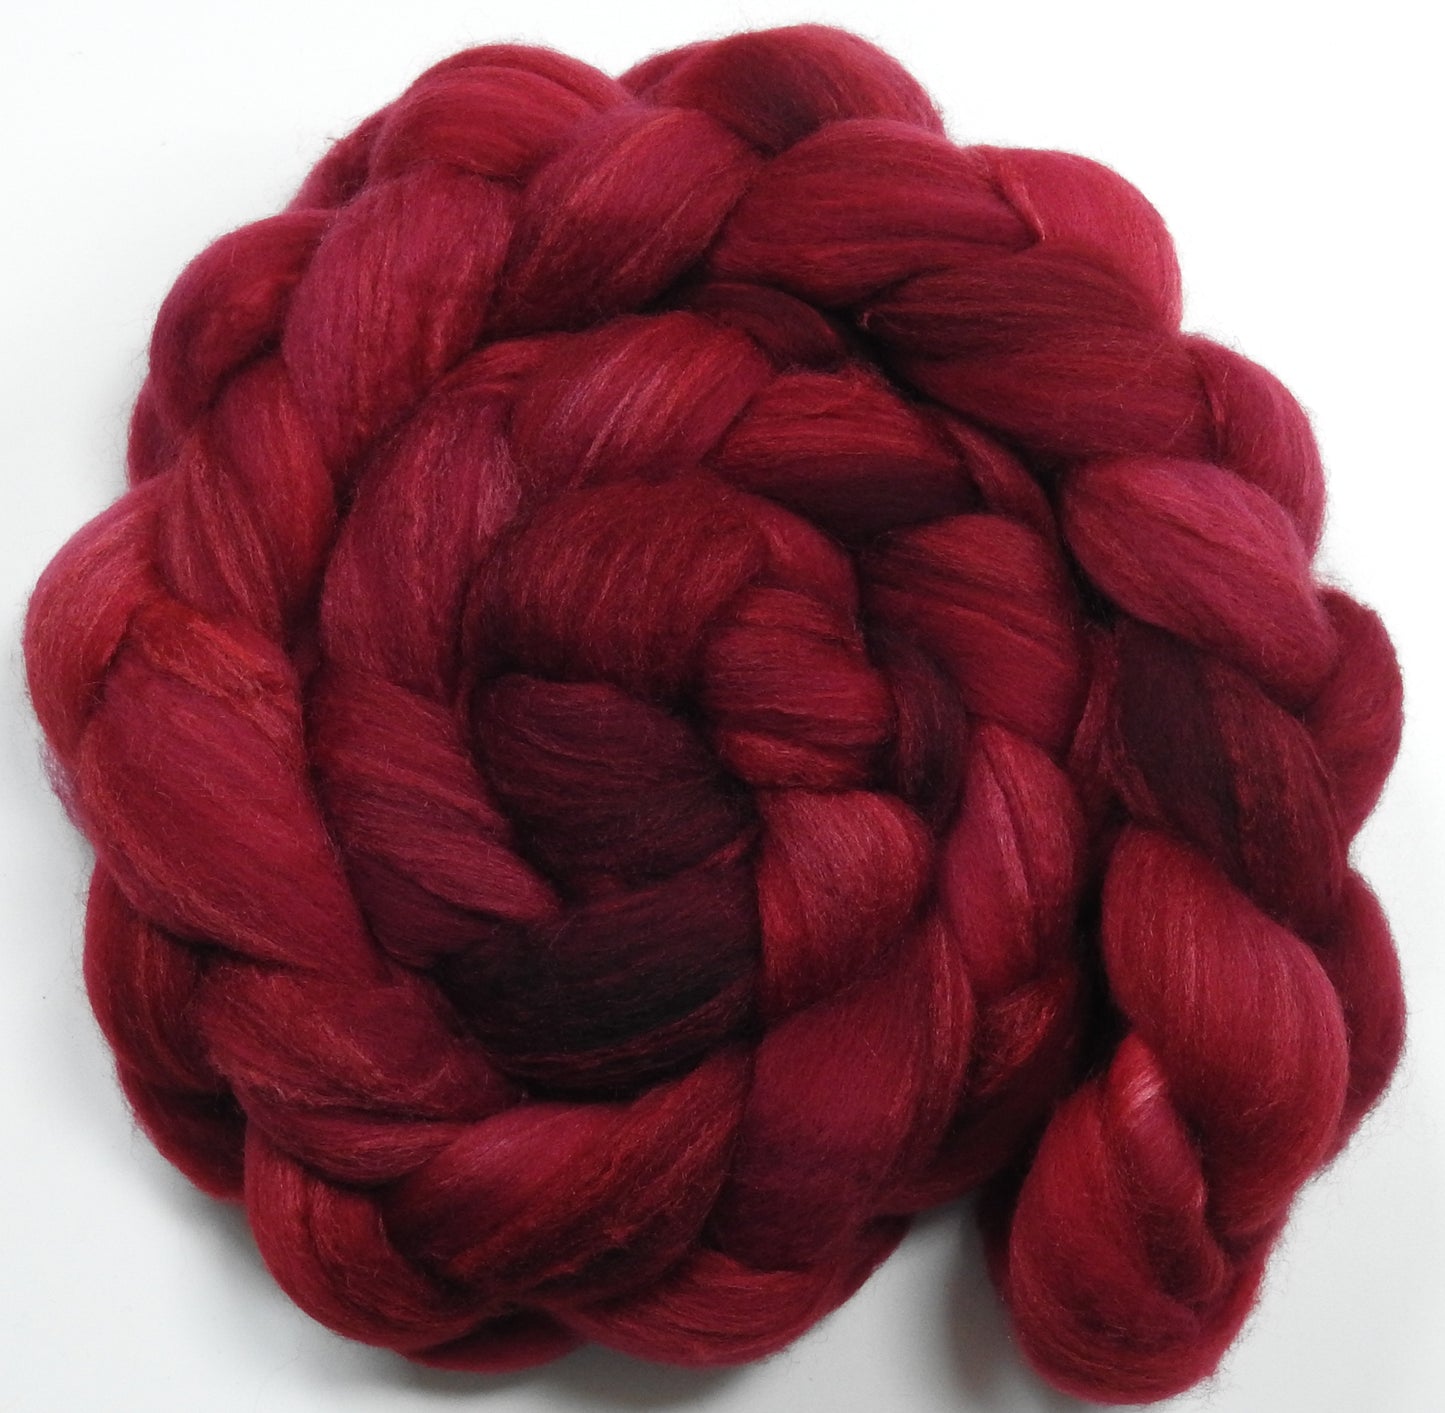 Crimson (5.5 oz) - Polwarth / Tussah silk (85/15)